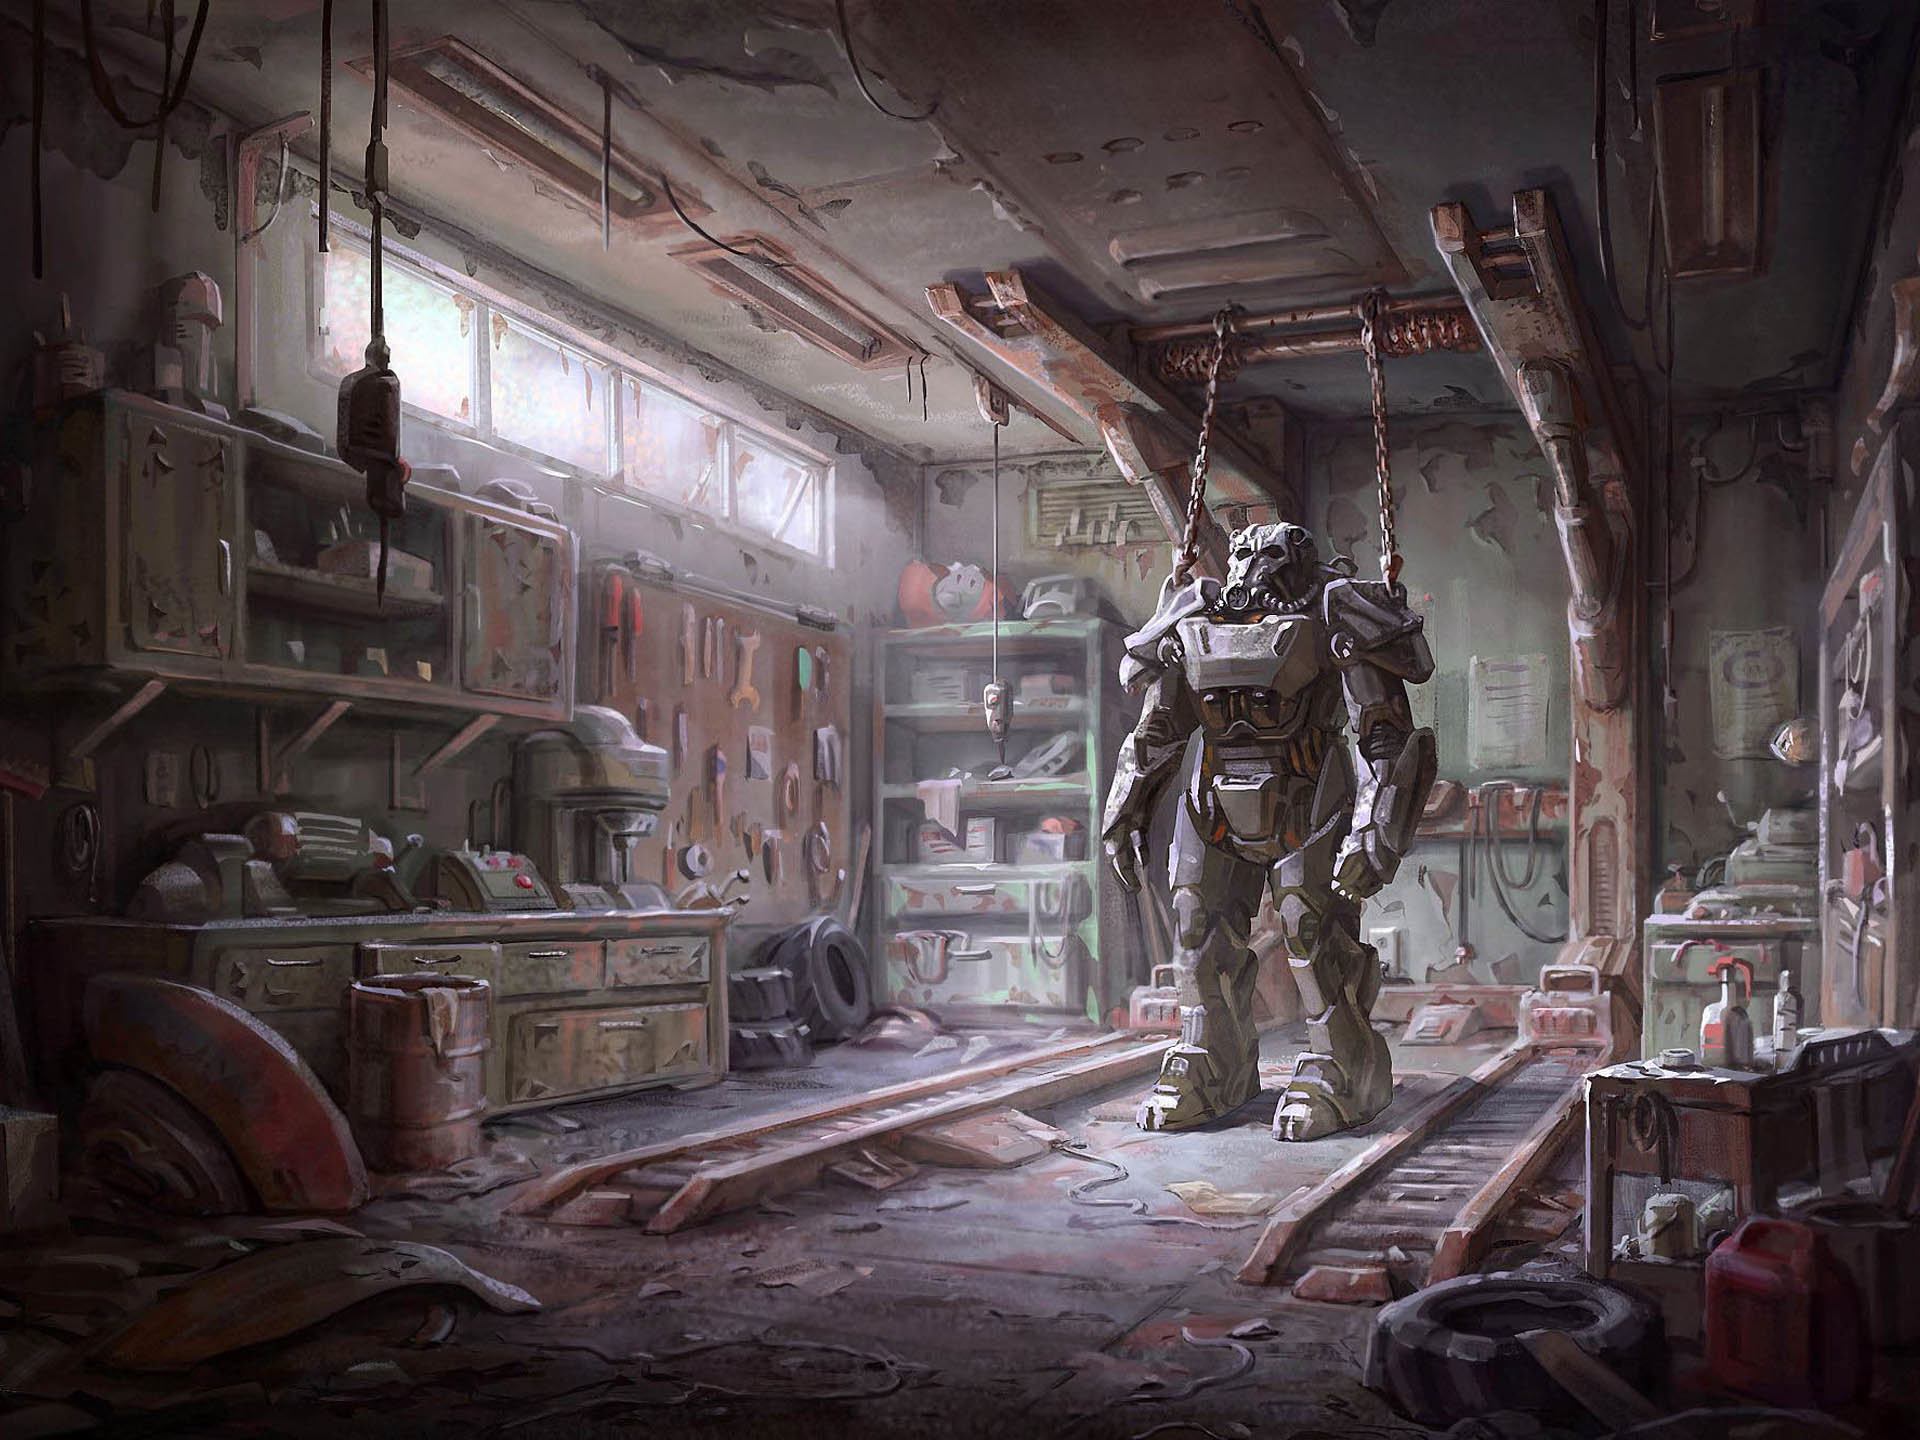 1920x1440 Fallout 4 Concept Art - Armor in the Garage  wallpaper